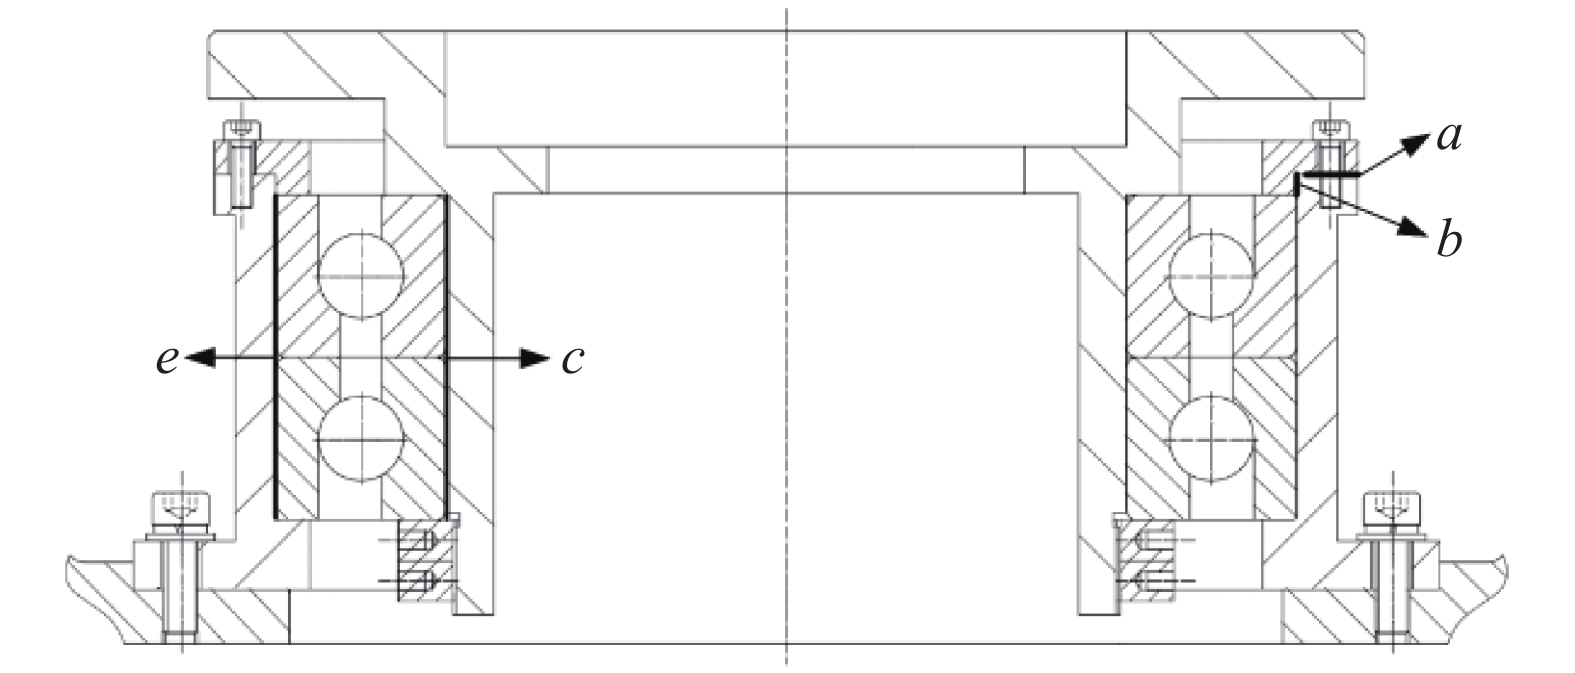 Gap design of vertical shaft